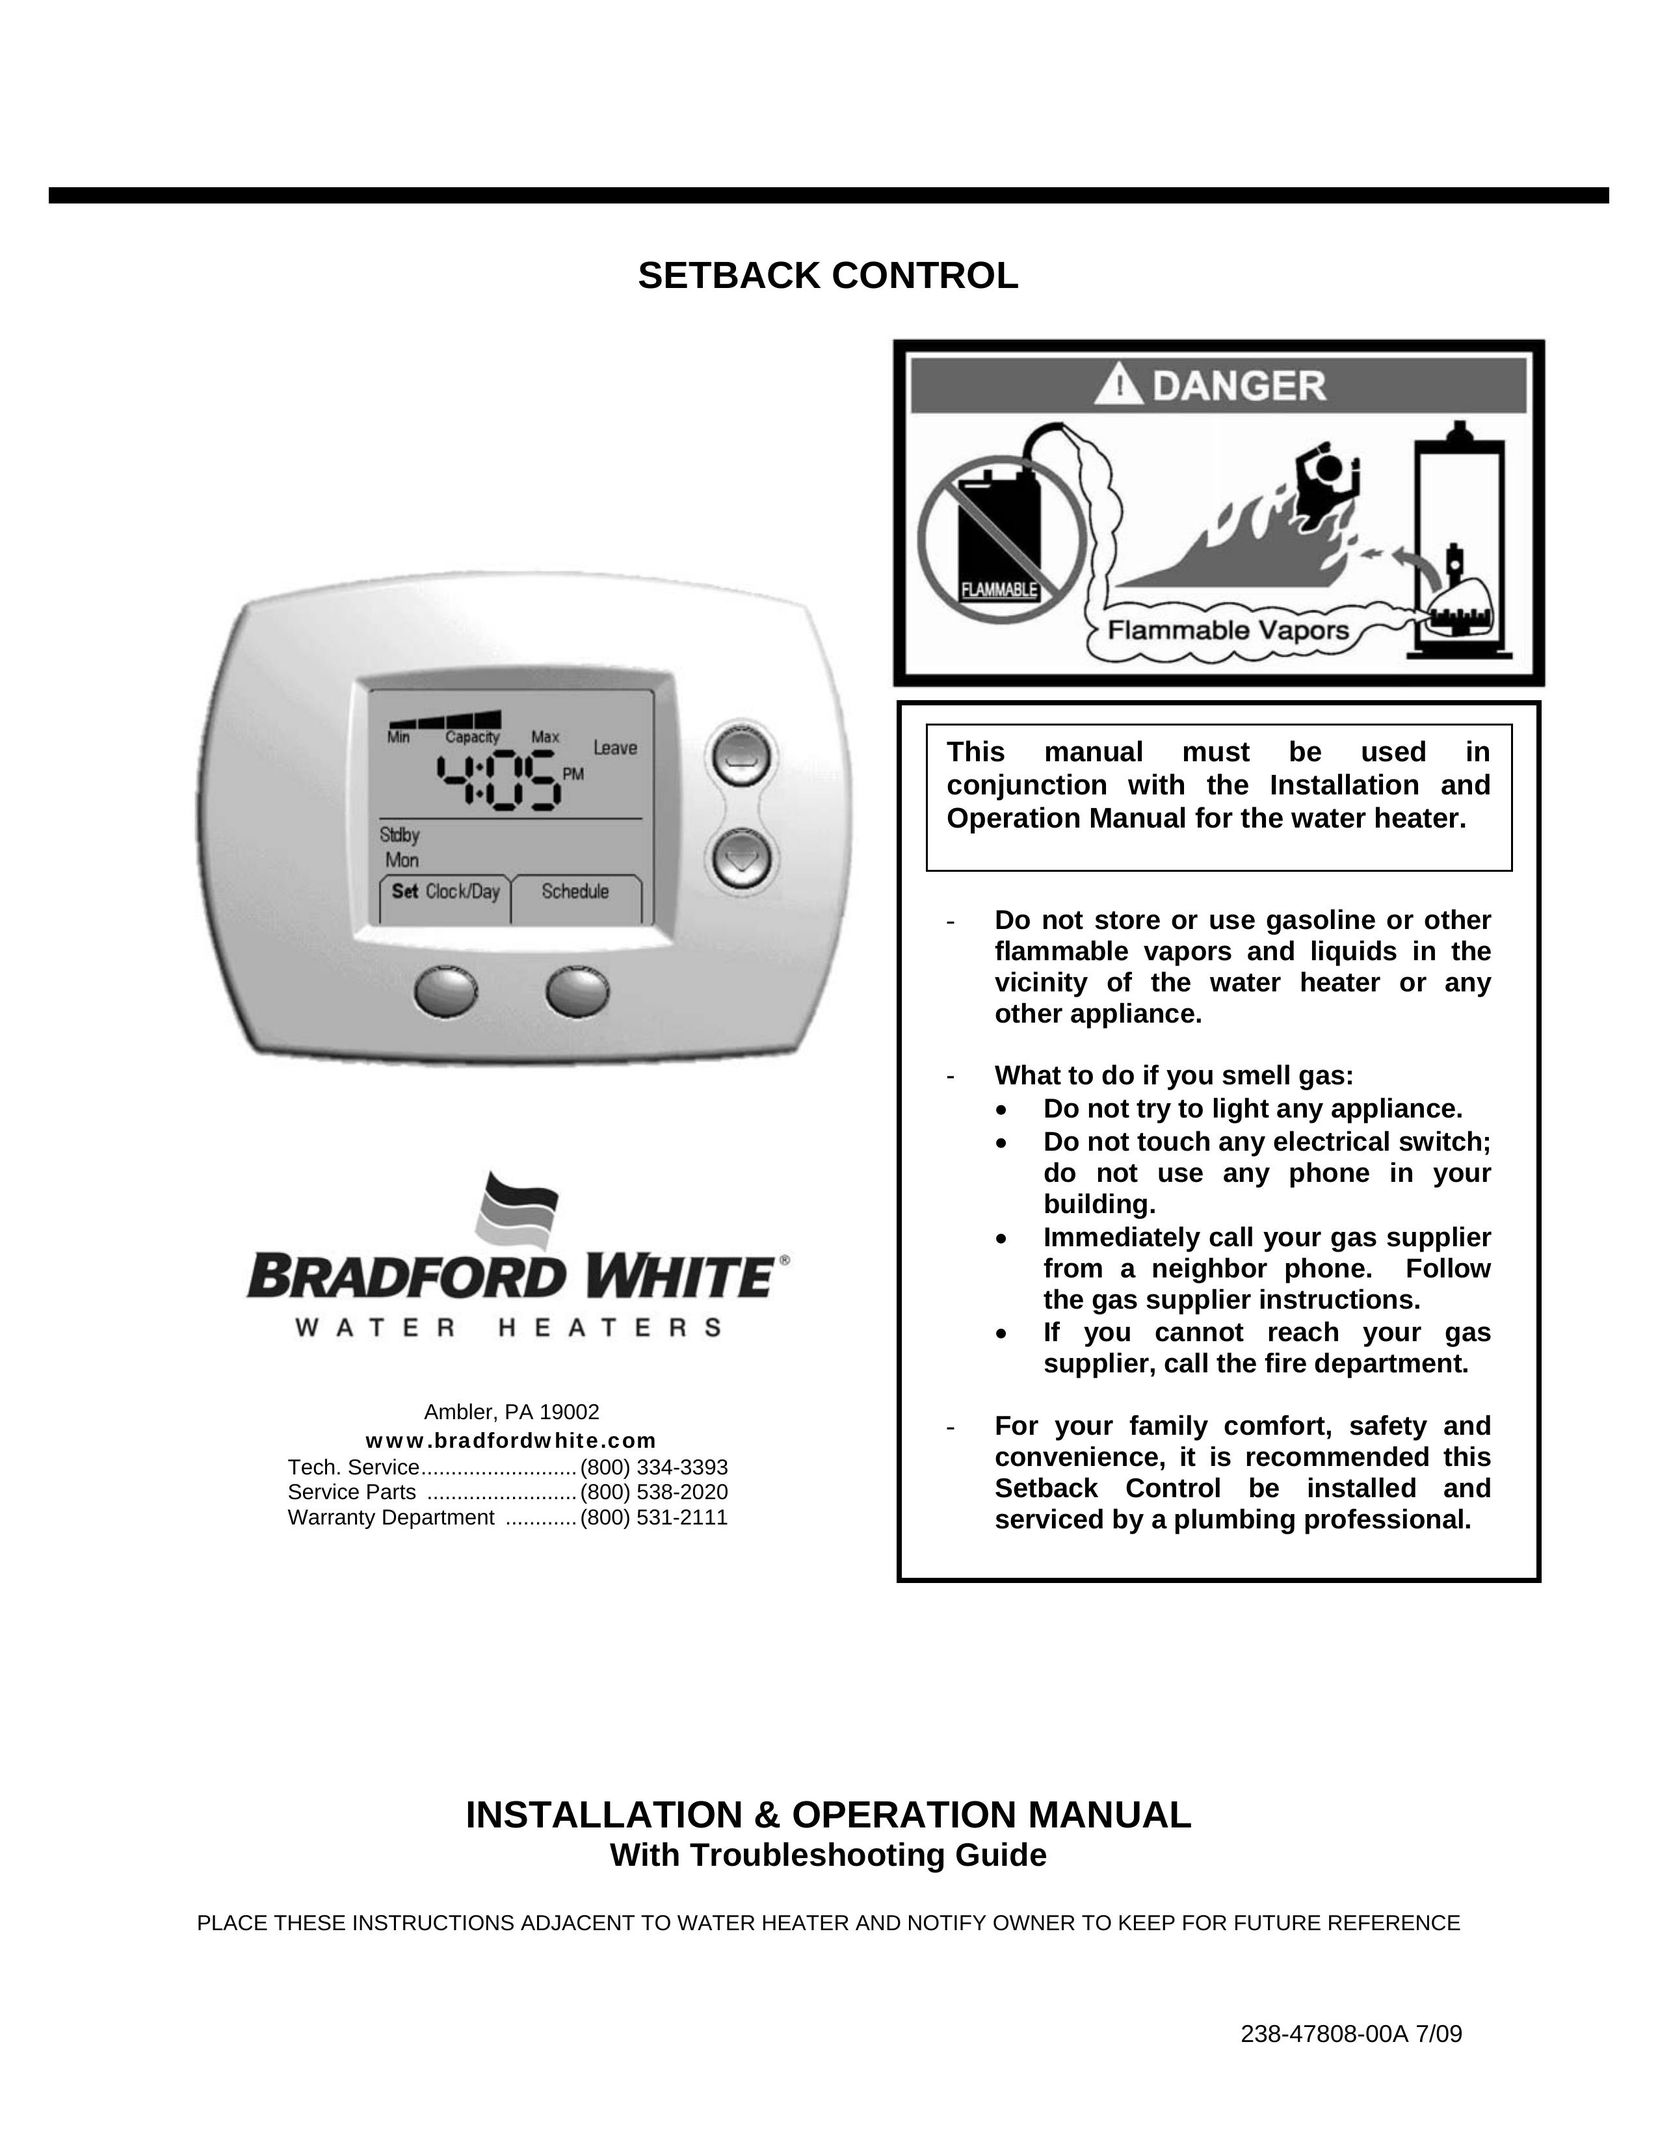 Bradford-White Corp 47808A Water Heater User Manual